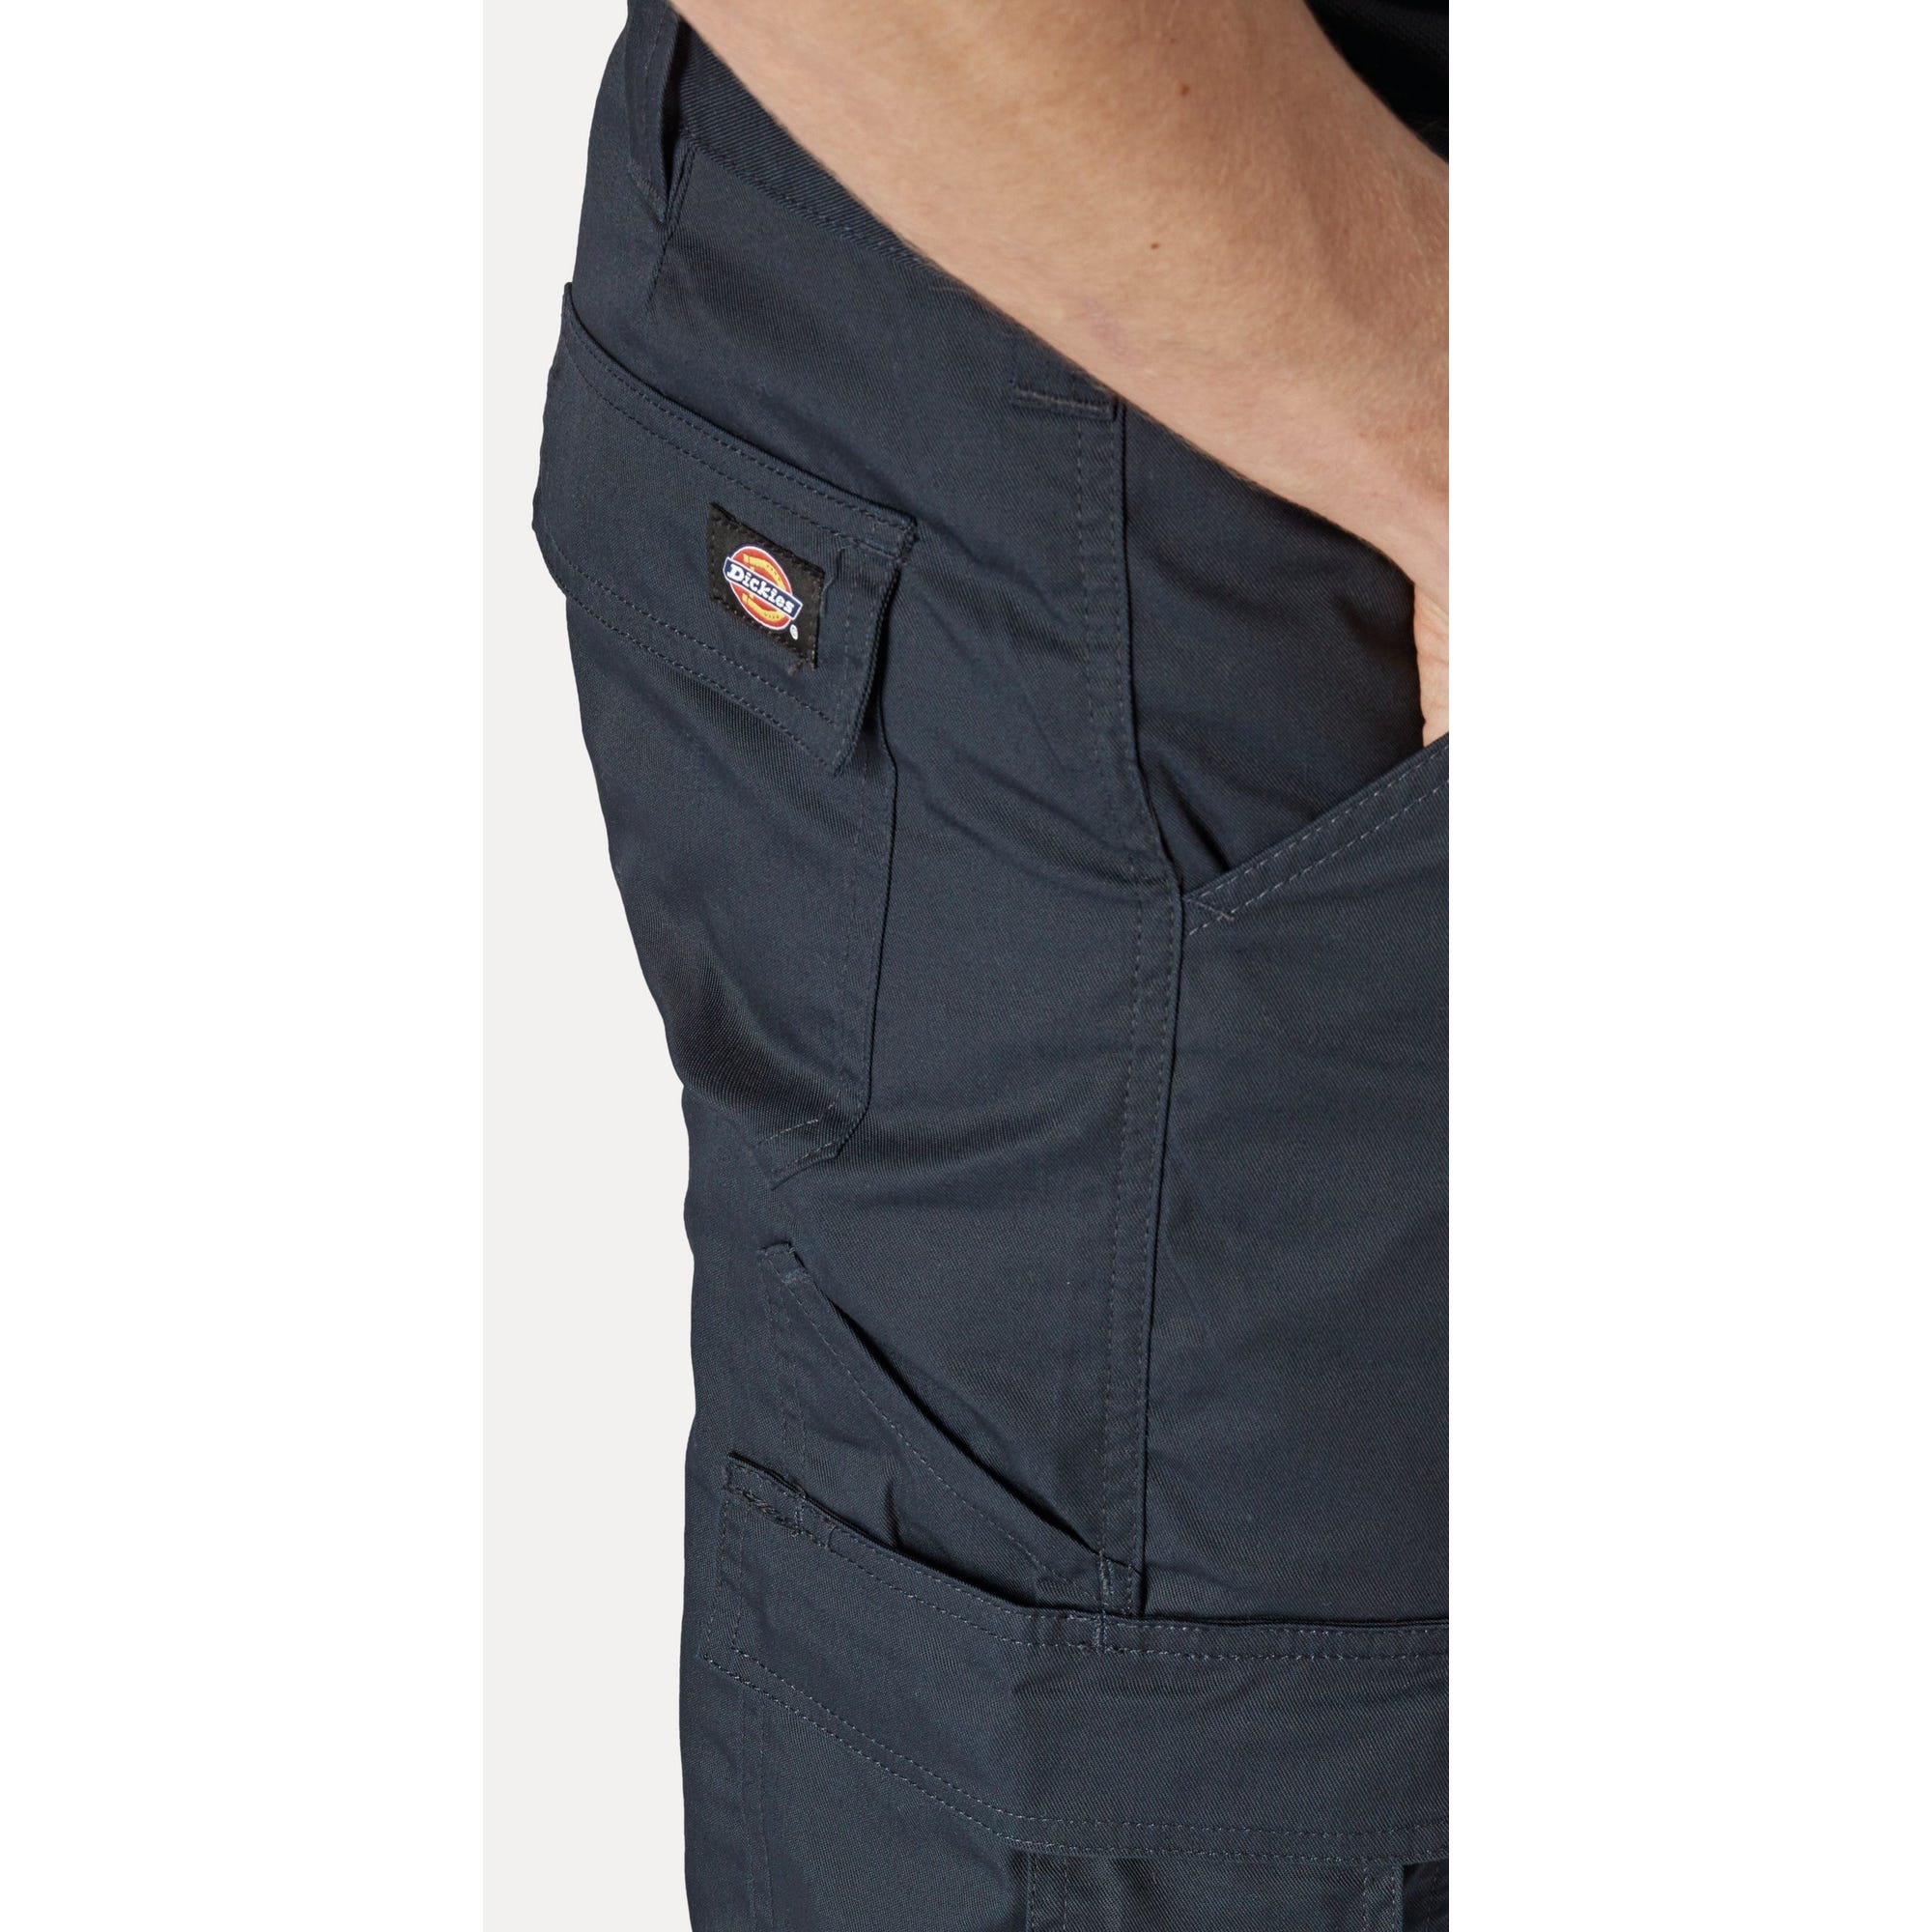 Pantalon Everyday Kaki et noir- Dickies - Taille 40 8